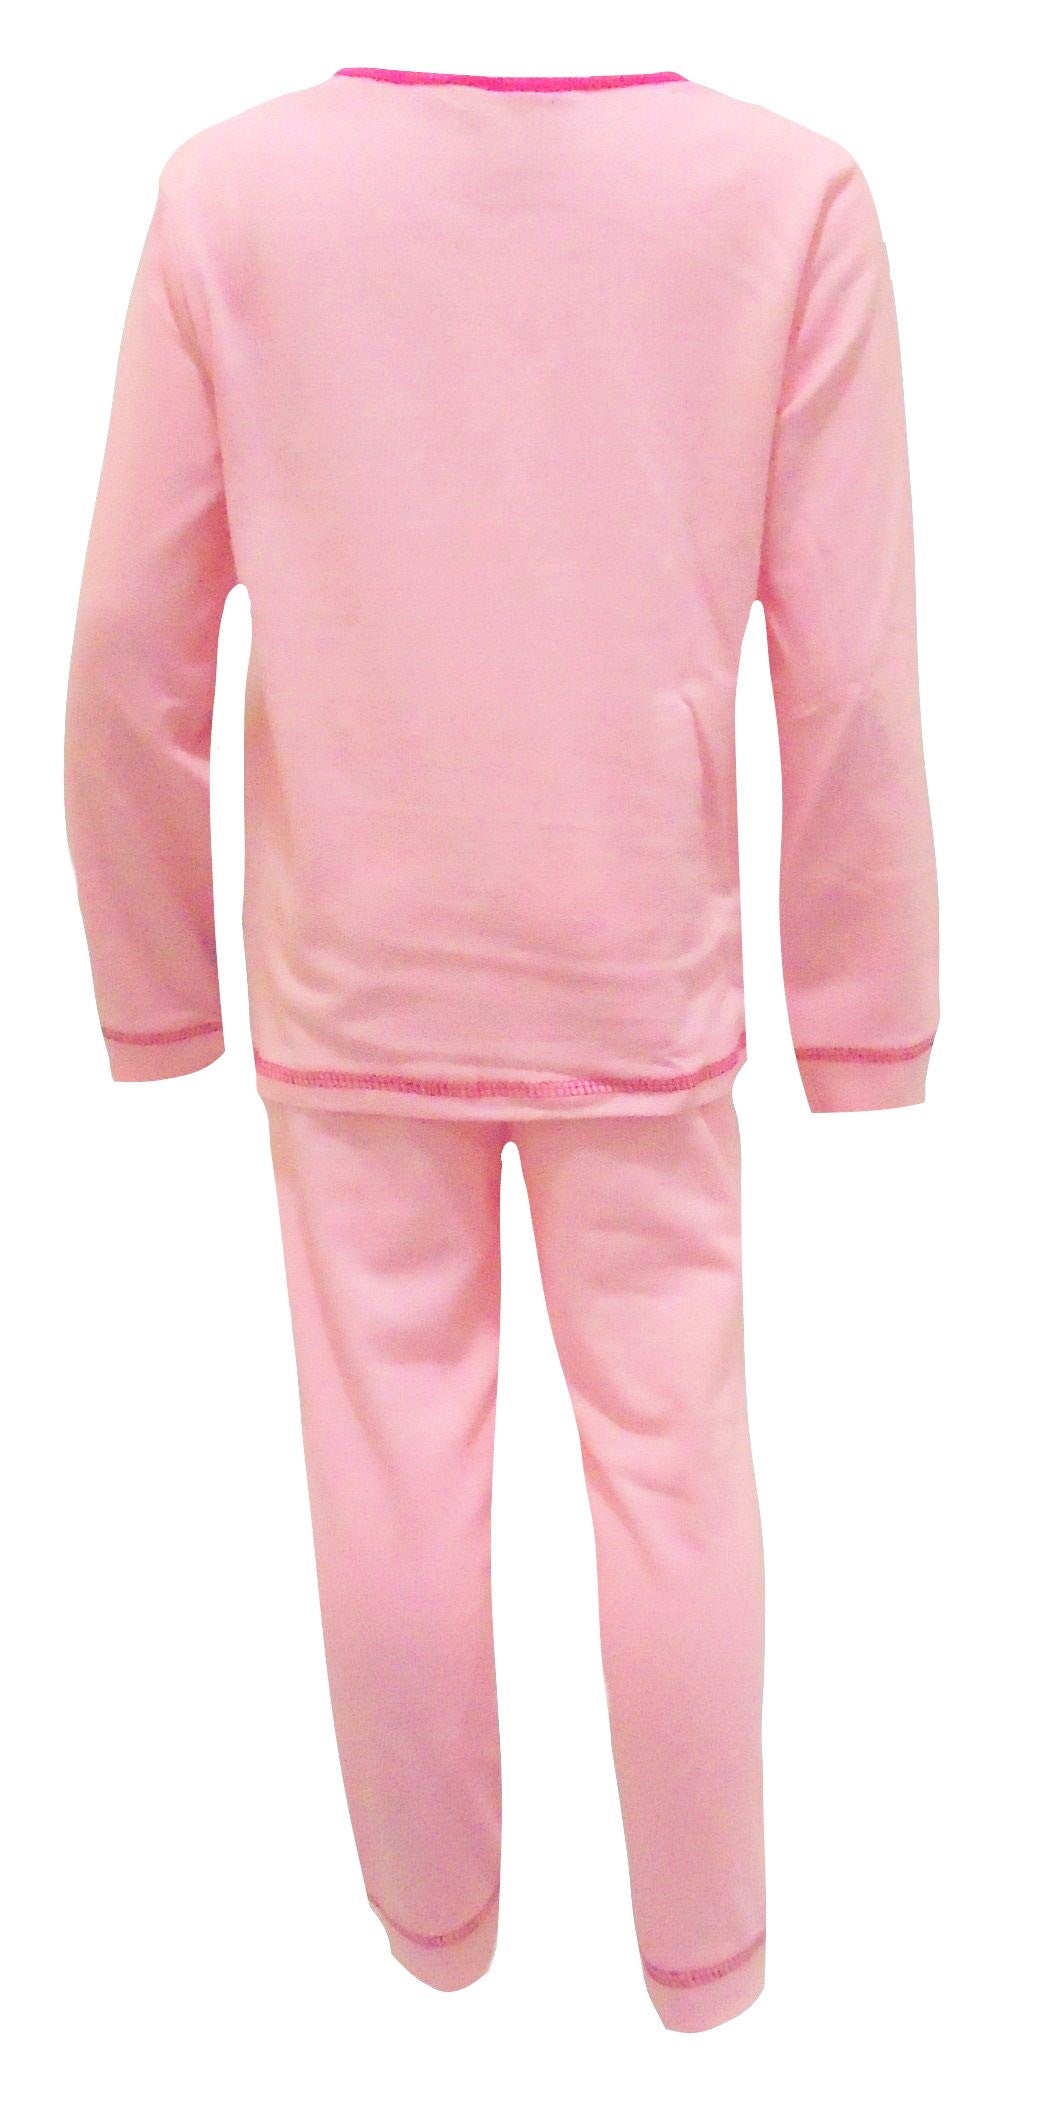 Baby Shark "Doo Doo" Girls pink pyjamas age 4-5 Years